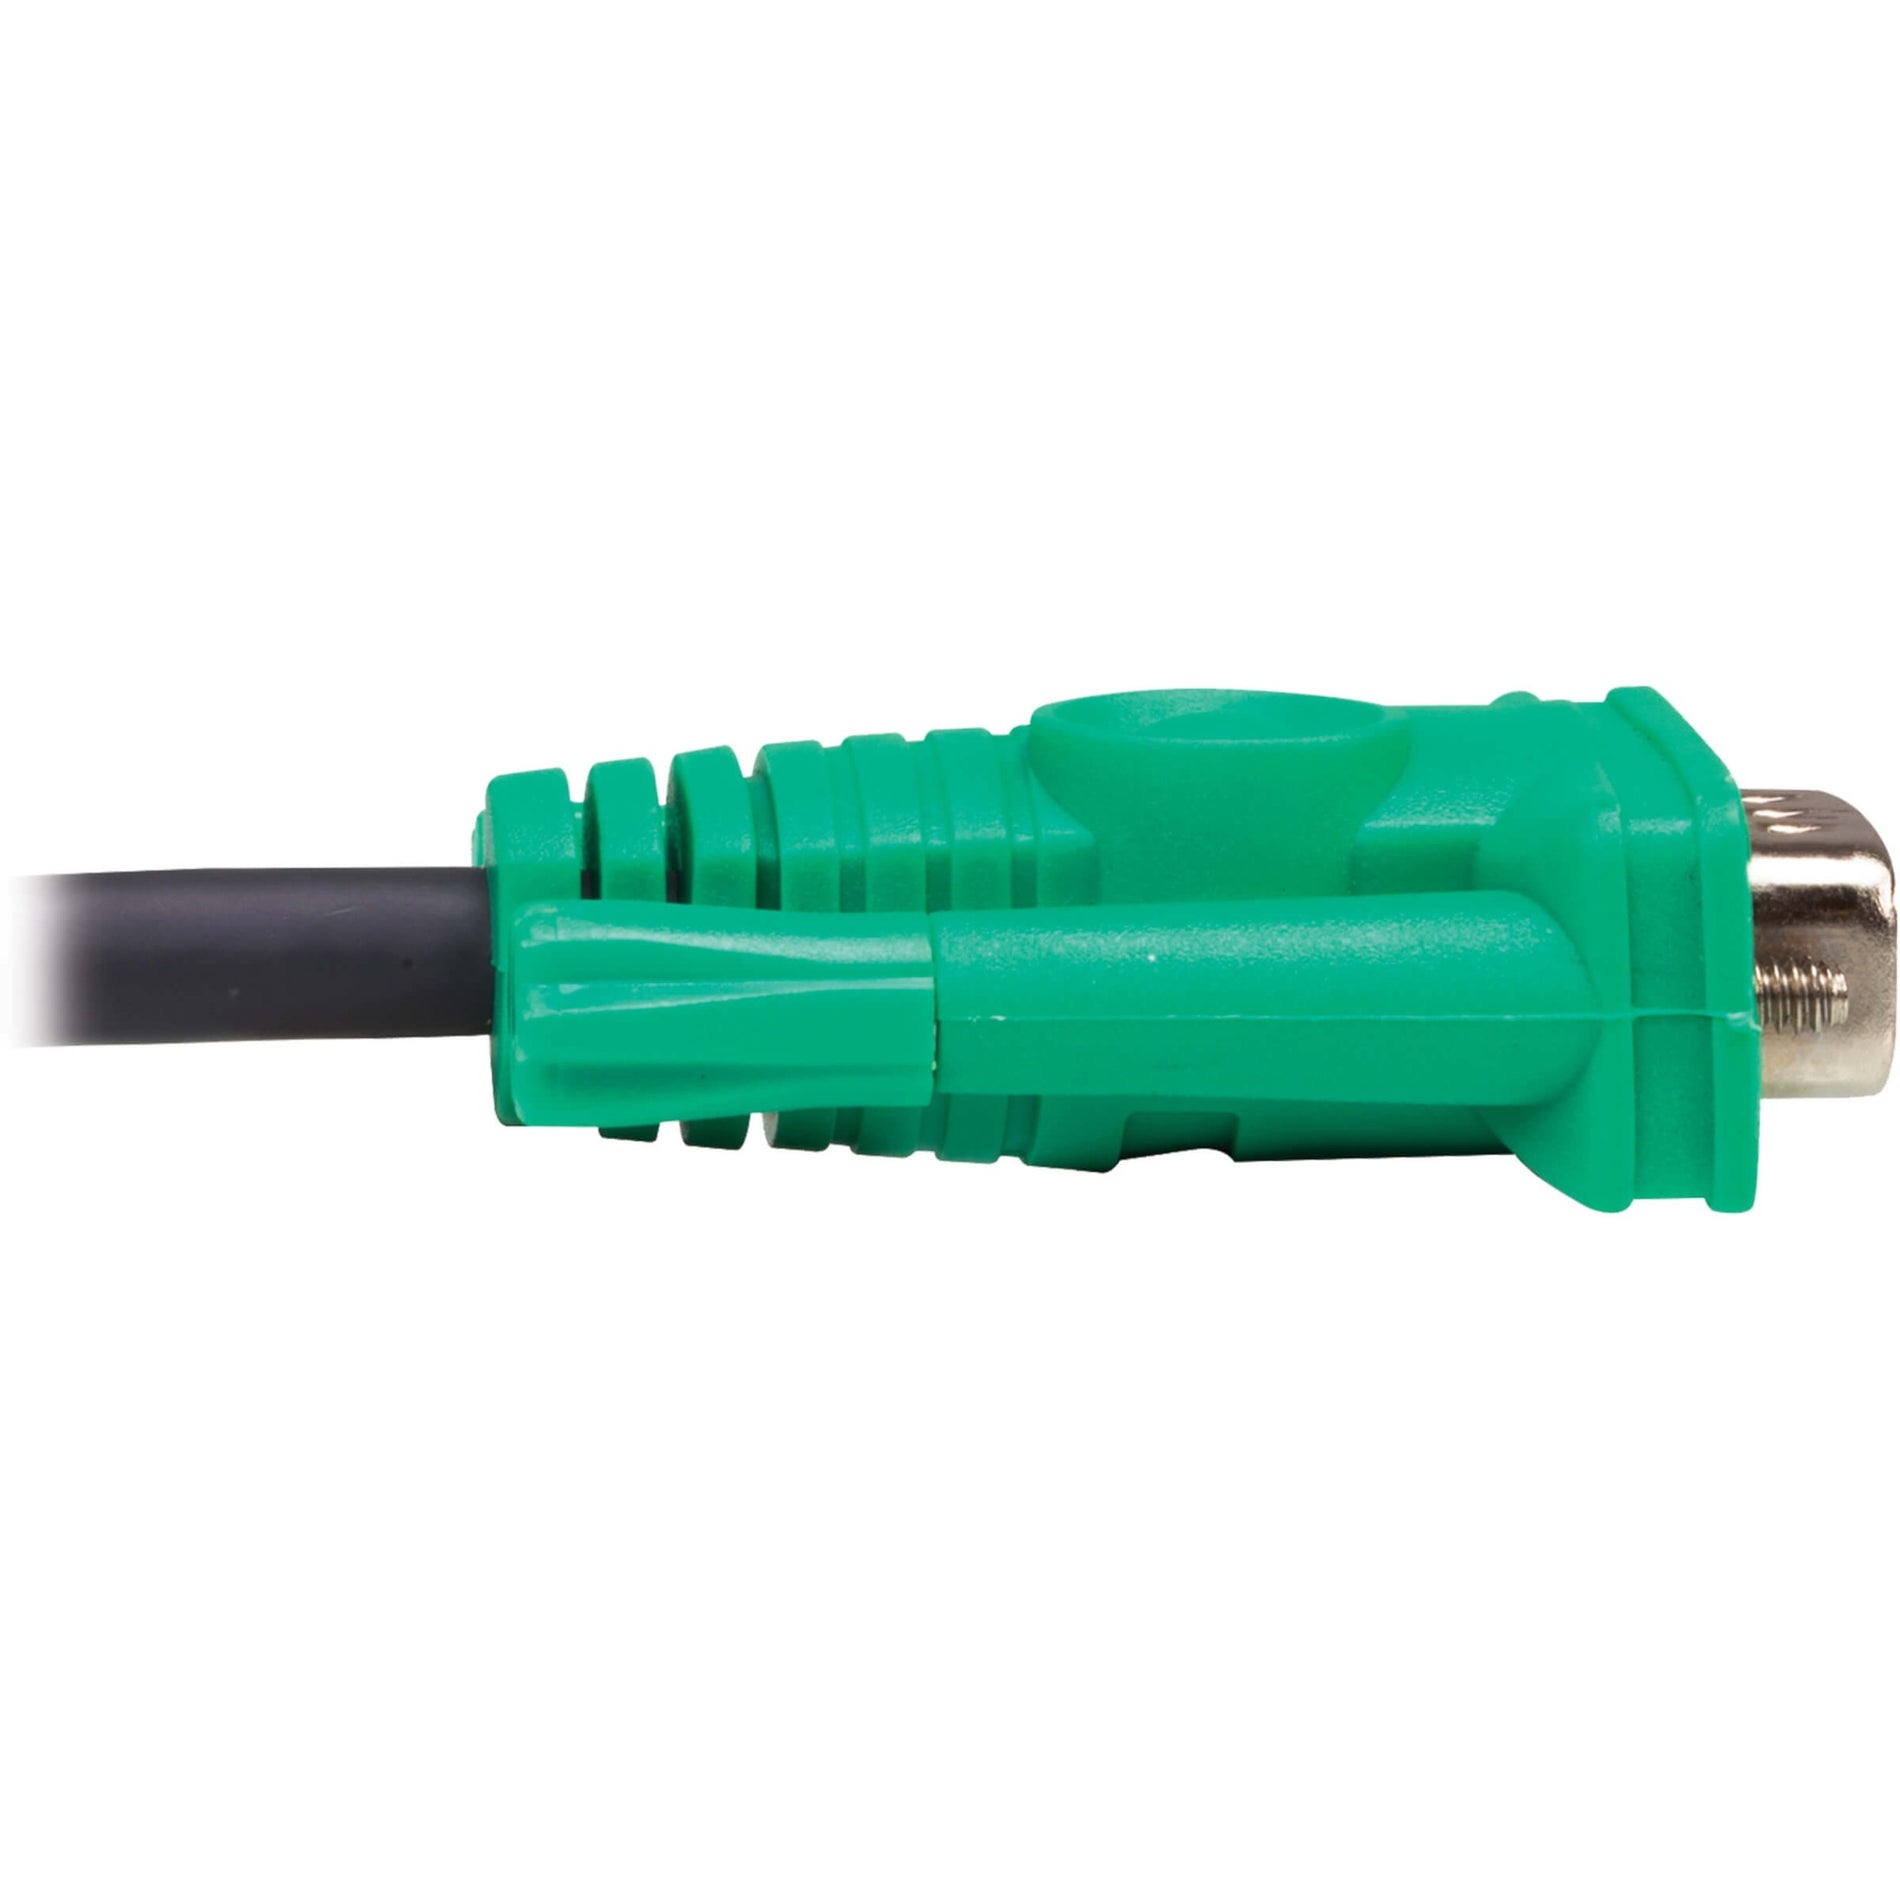 Tripp Lite P778-006-DP VGA to DisplayPort and USB Adapter Cable Kit, 6 ft. (1.8 m), LED Indicator, Plug & Play